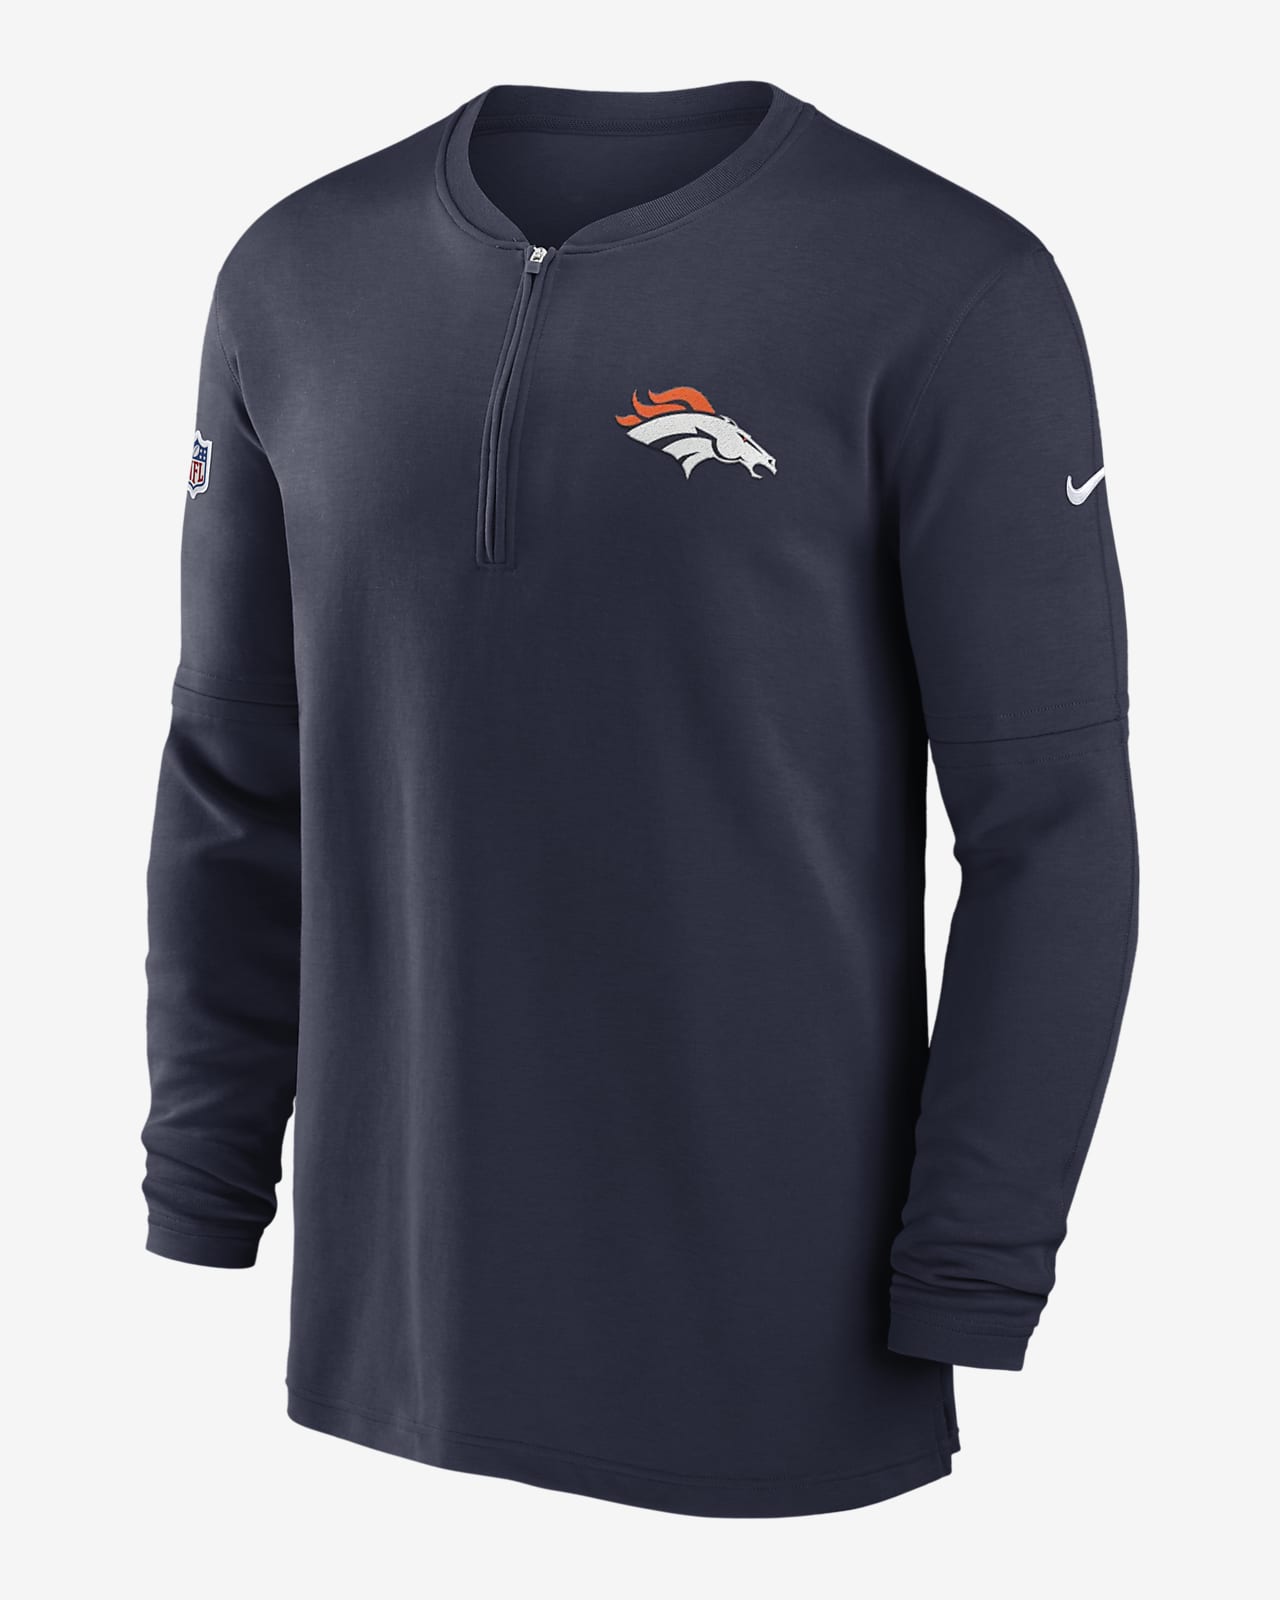 Playera de manga larga Nike Dri-FIT de la NFL de medio cierre para hombre Denver Broncos Sideline